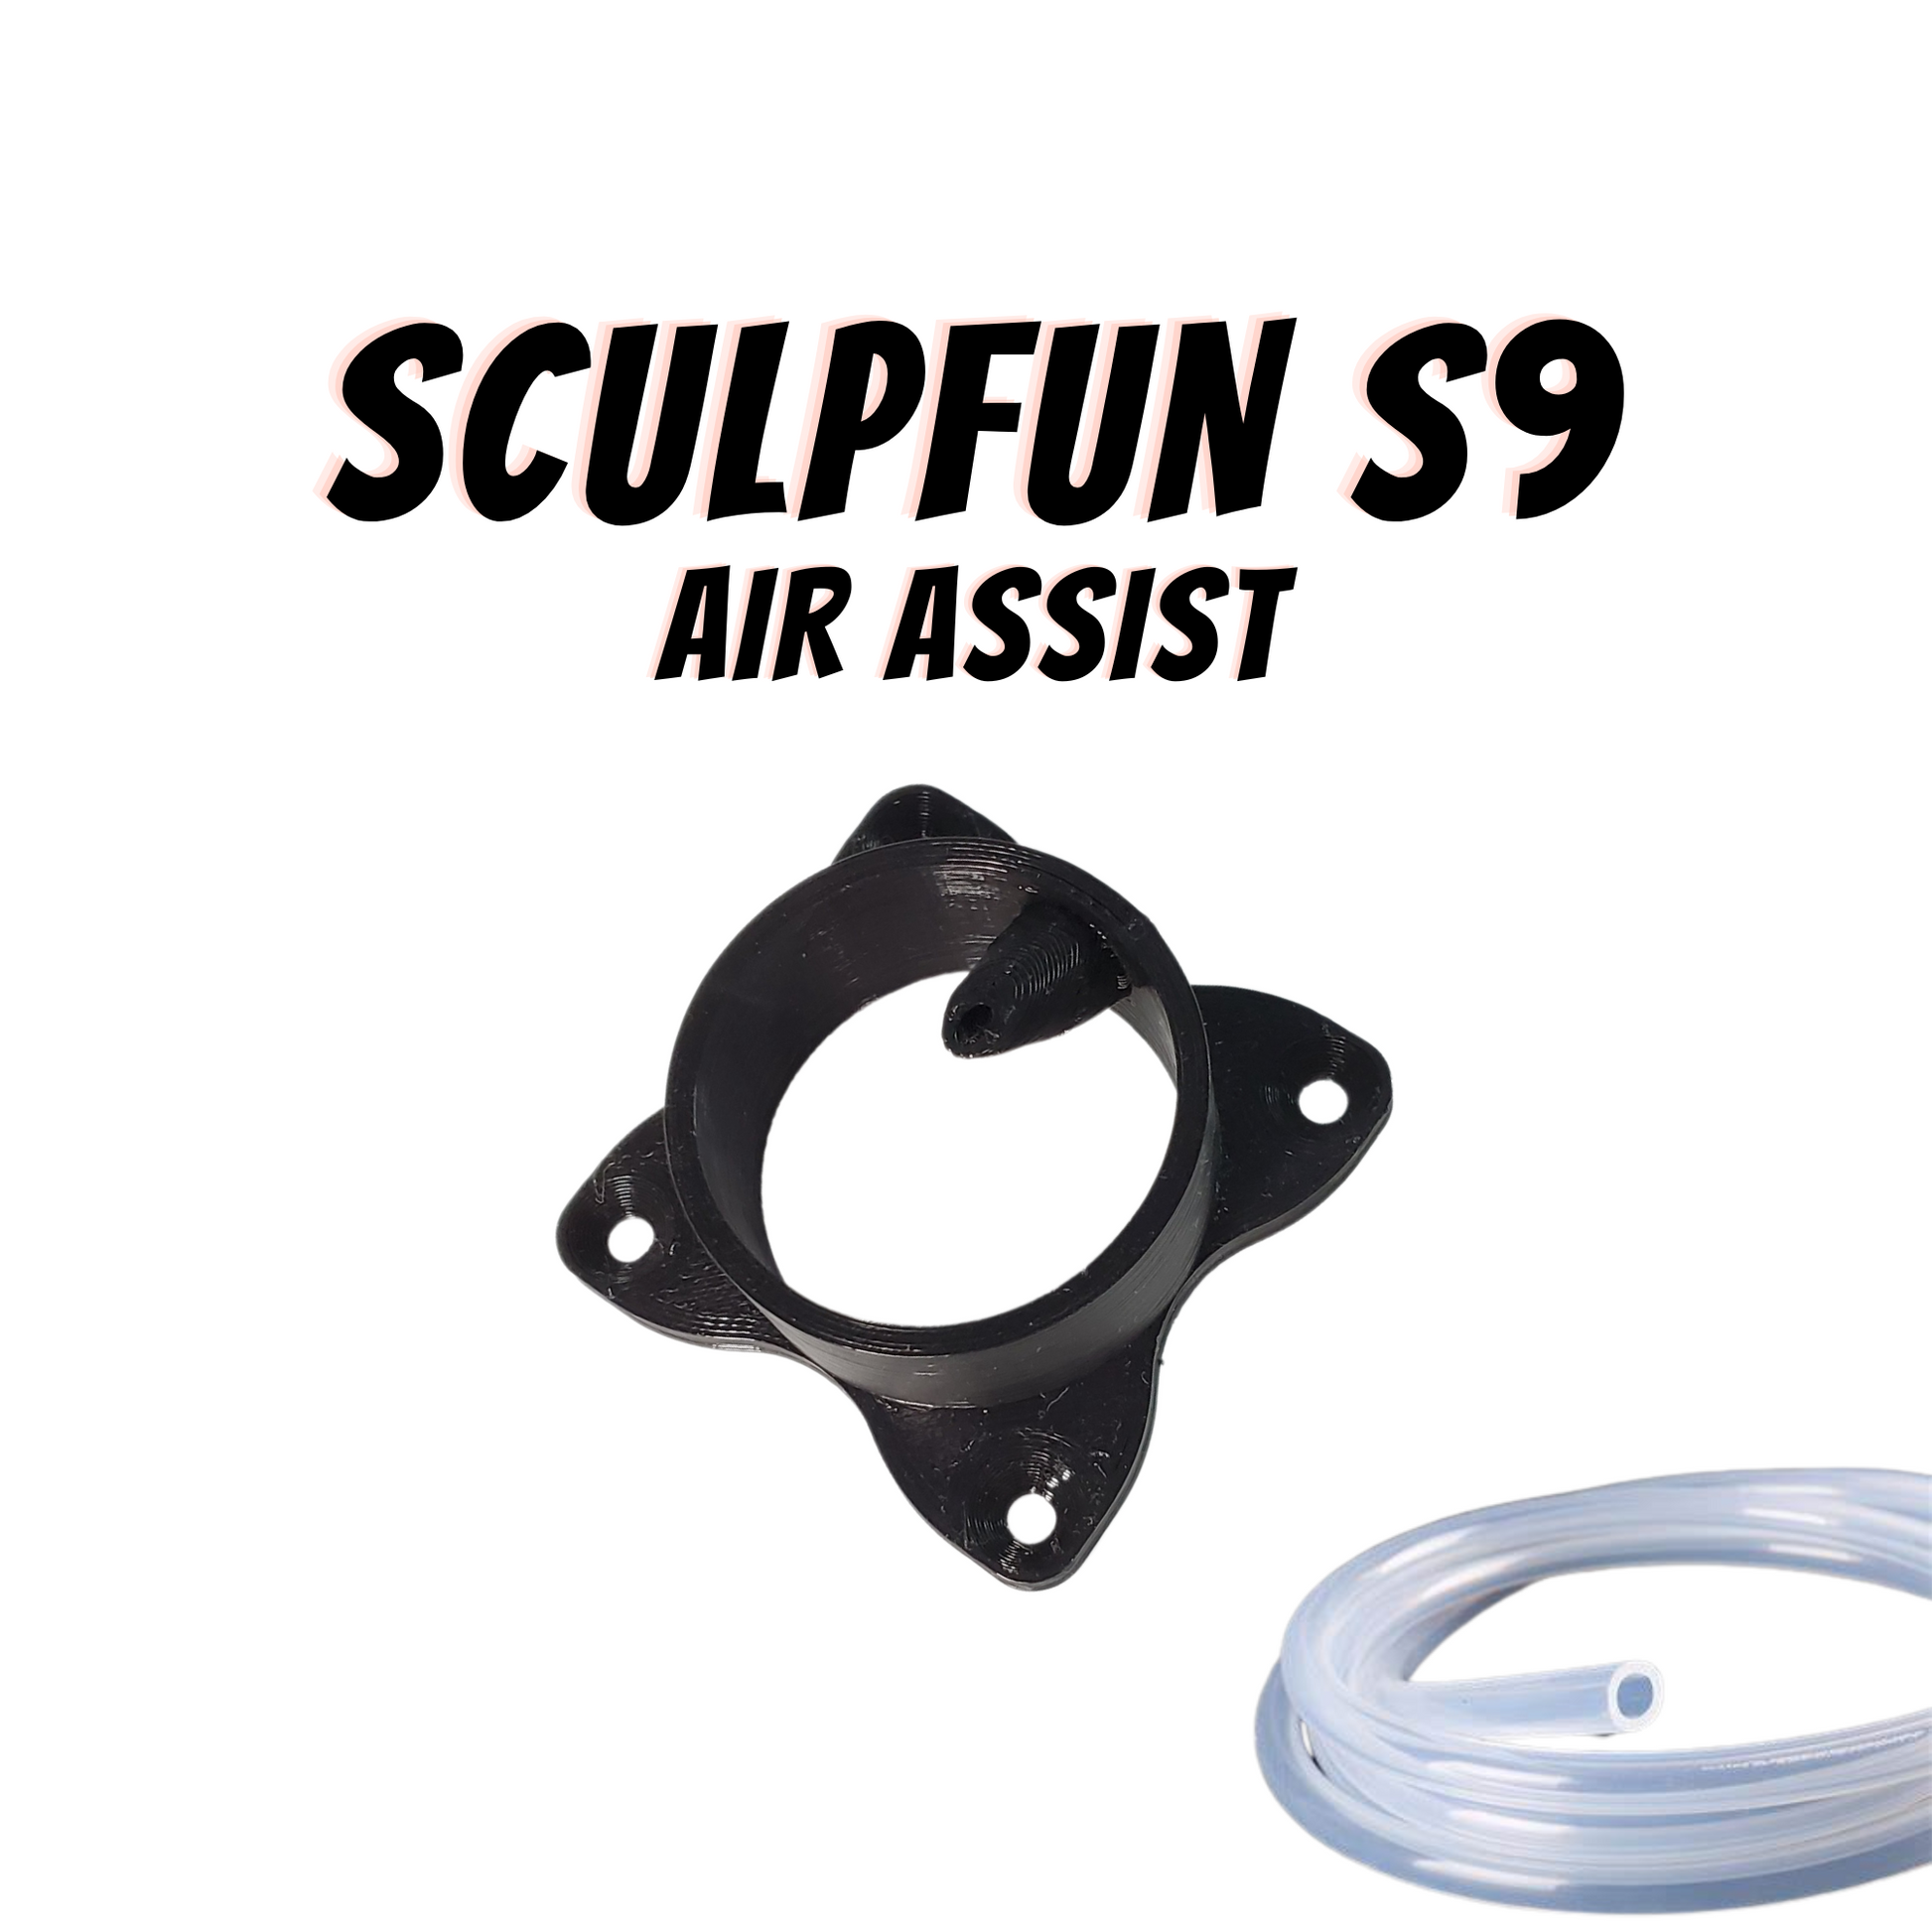 Sculpfun S9 Air Assist – King Gubby